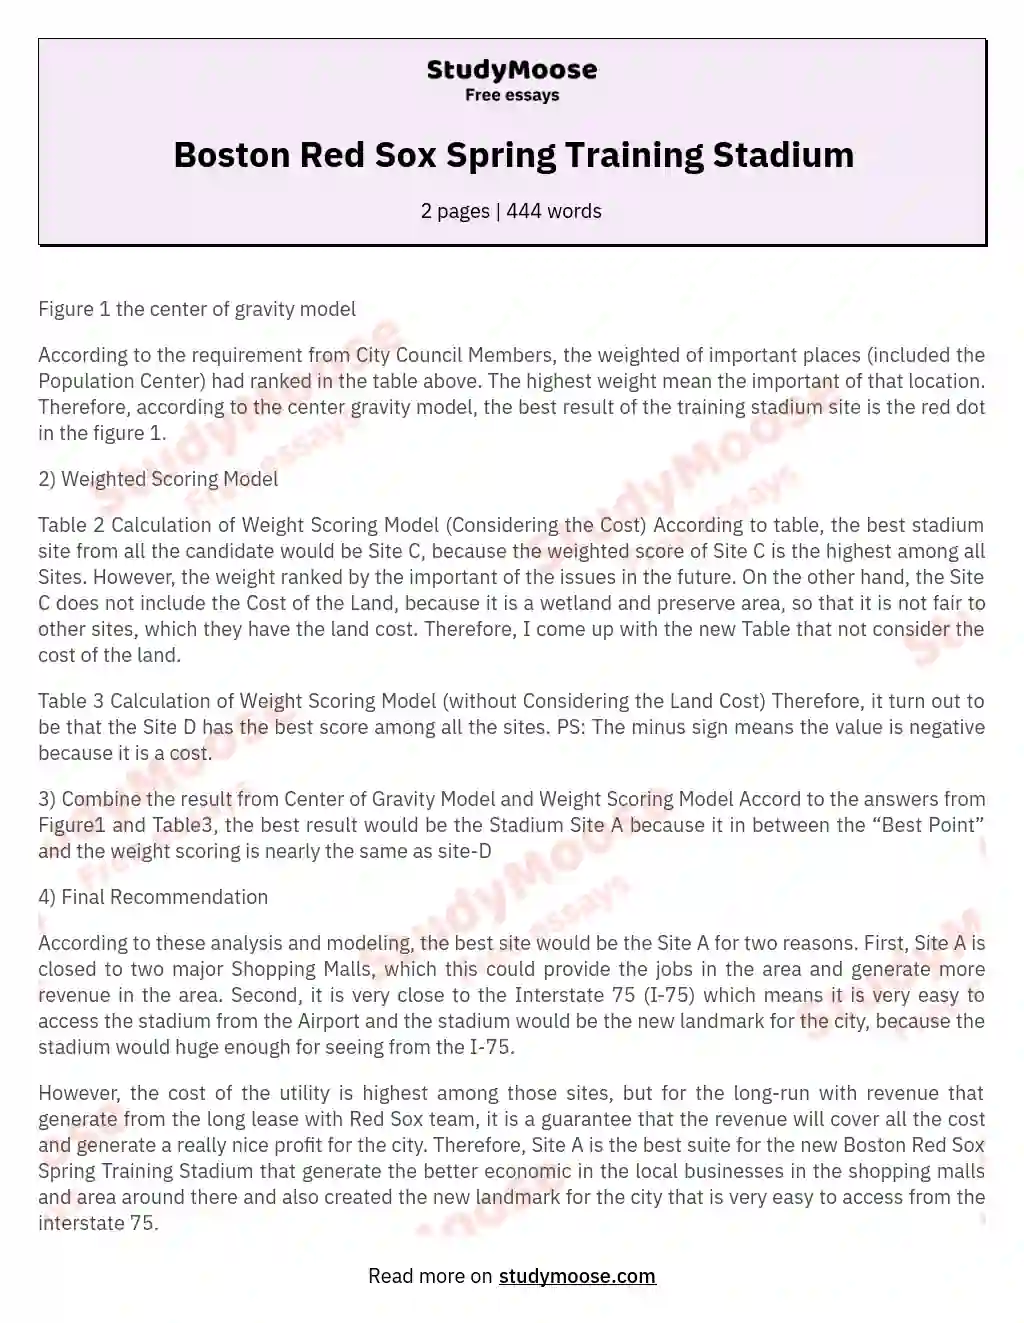 Boston Red Sox Spring Training Stadium essay